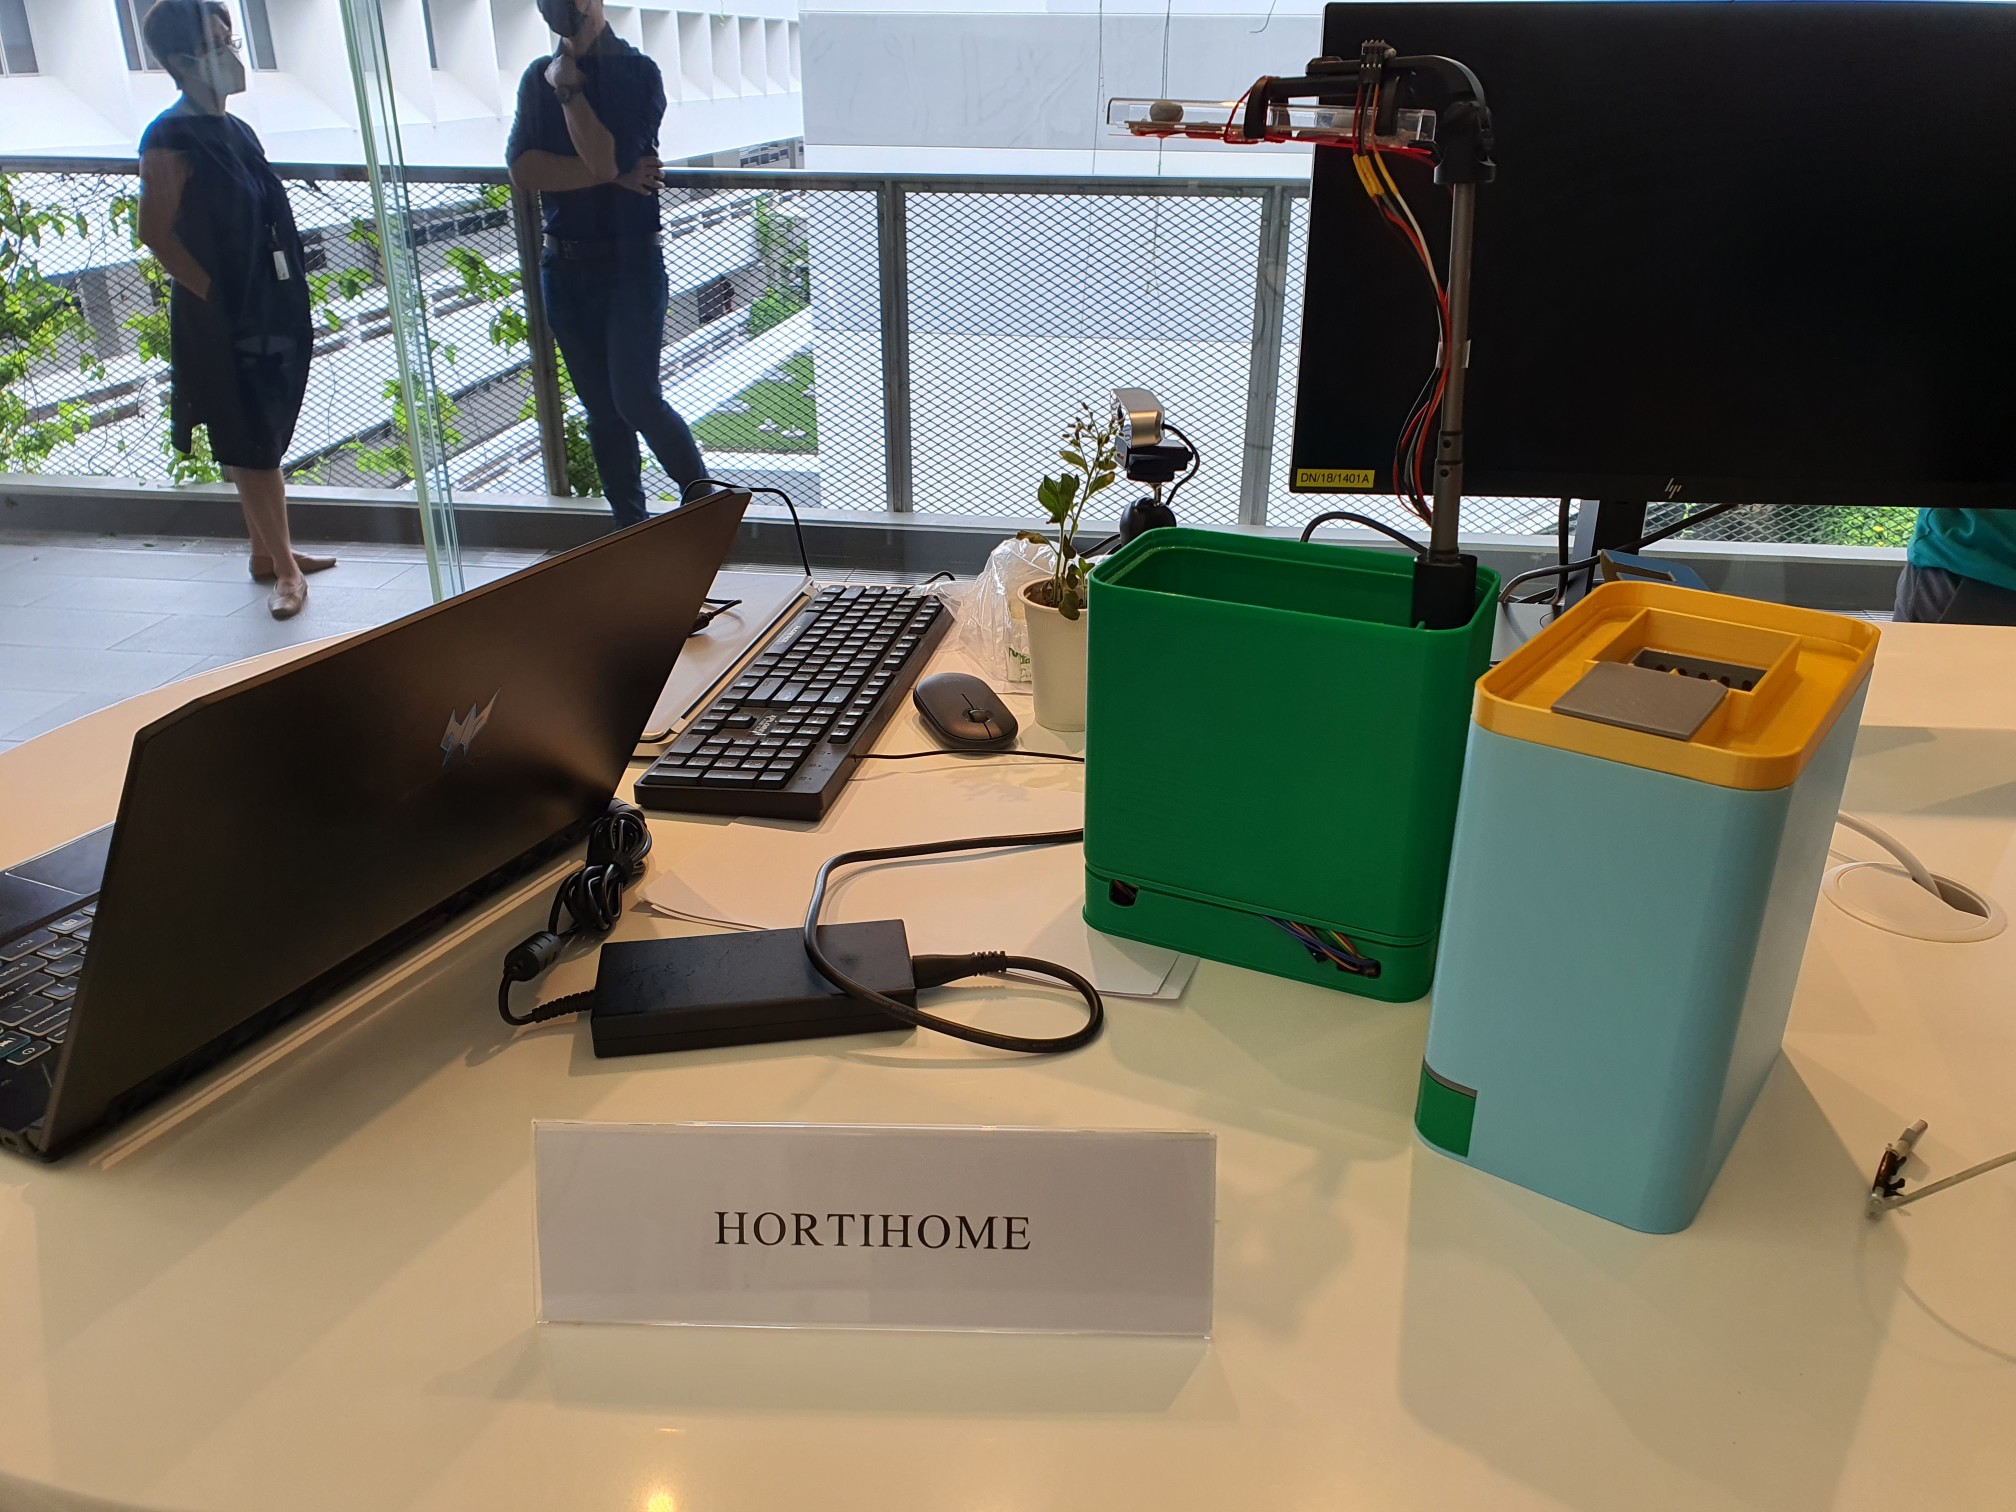 Team Hortihome prototype display